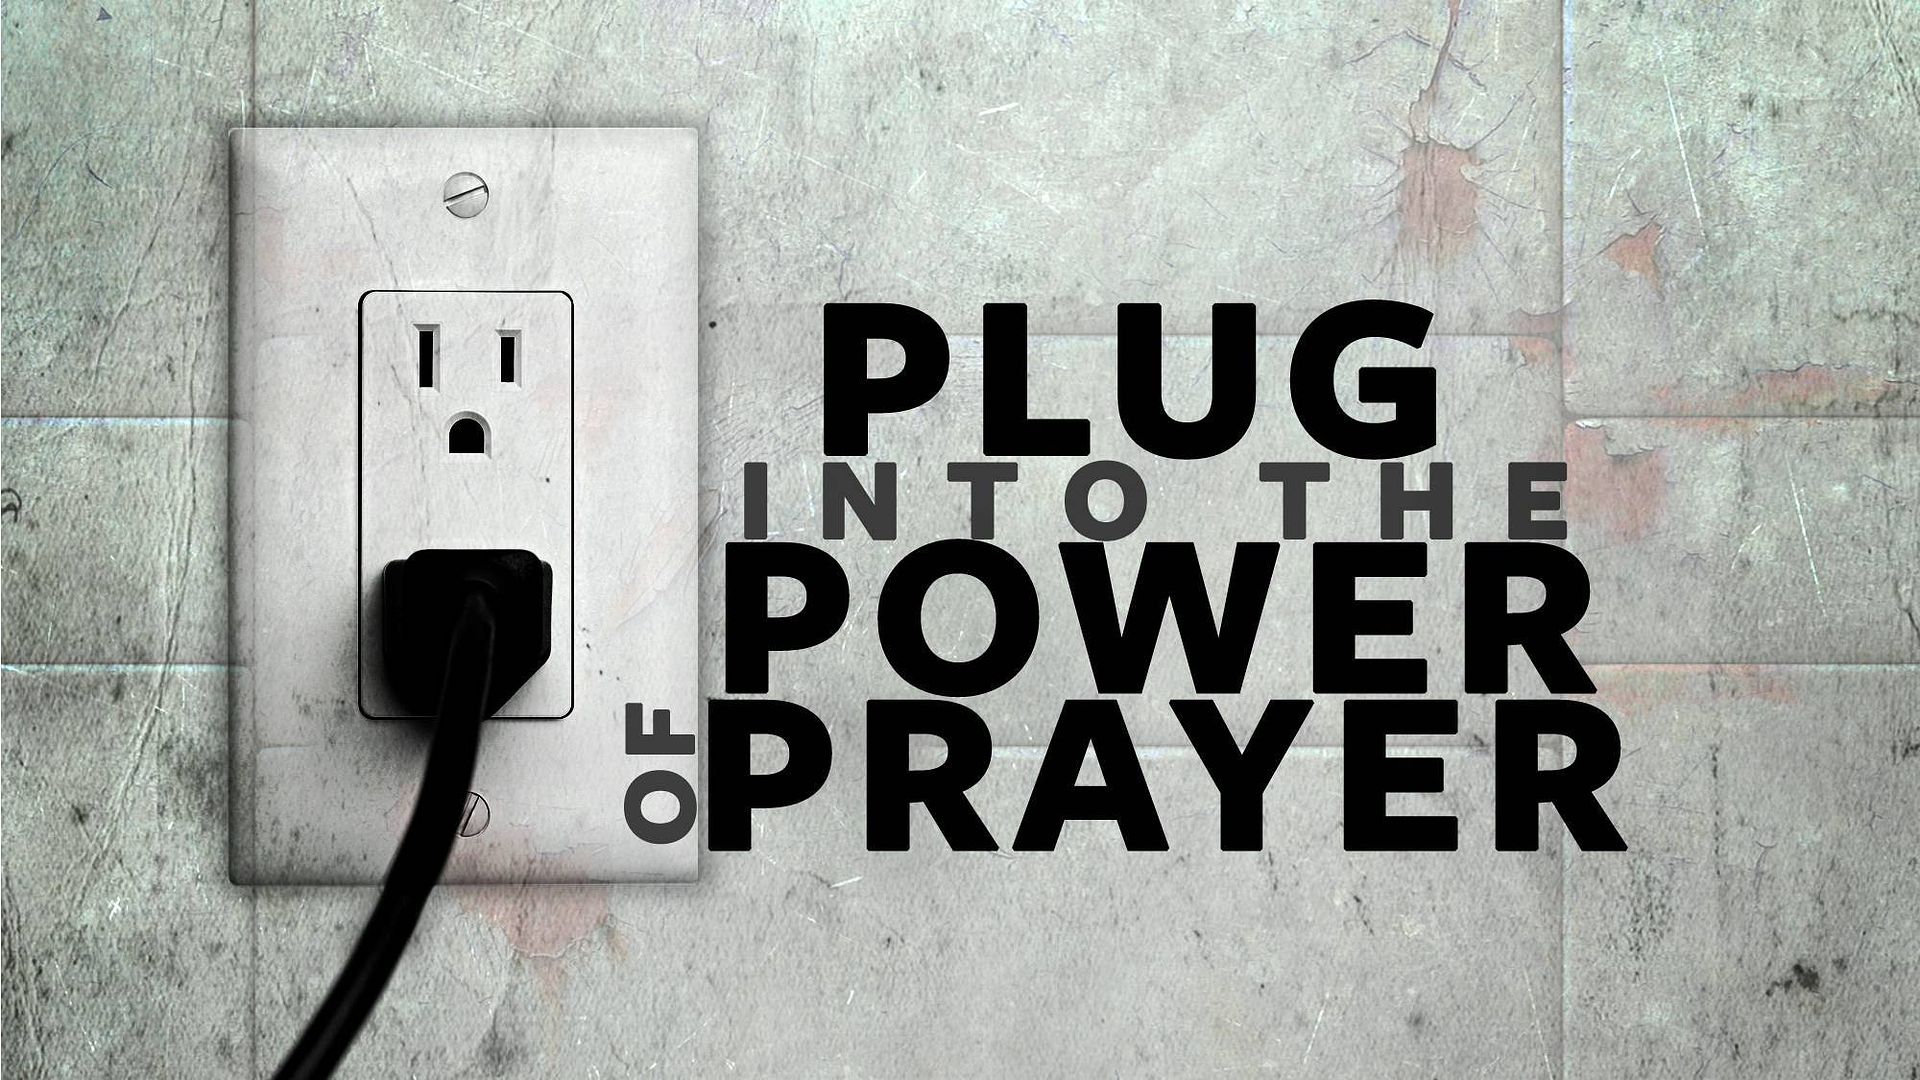 Power of Prayer photo power of prayer_zpshocrgbpz.jpg